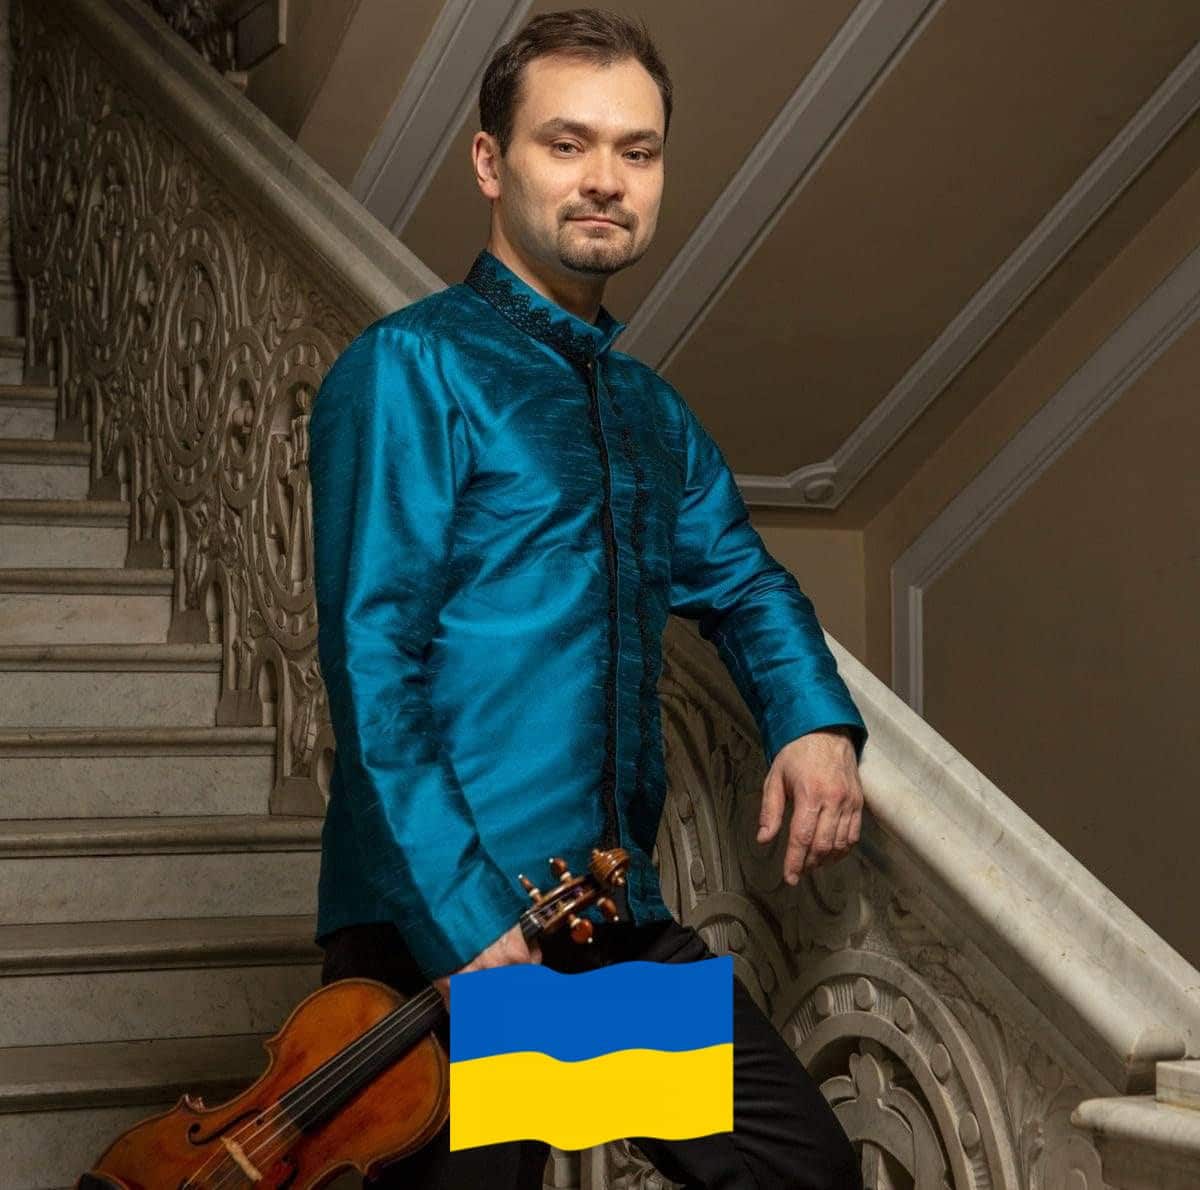 Poles refuse to fly a Stradivarius